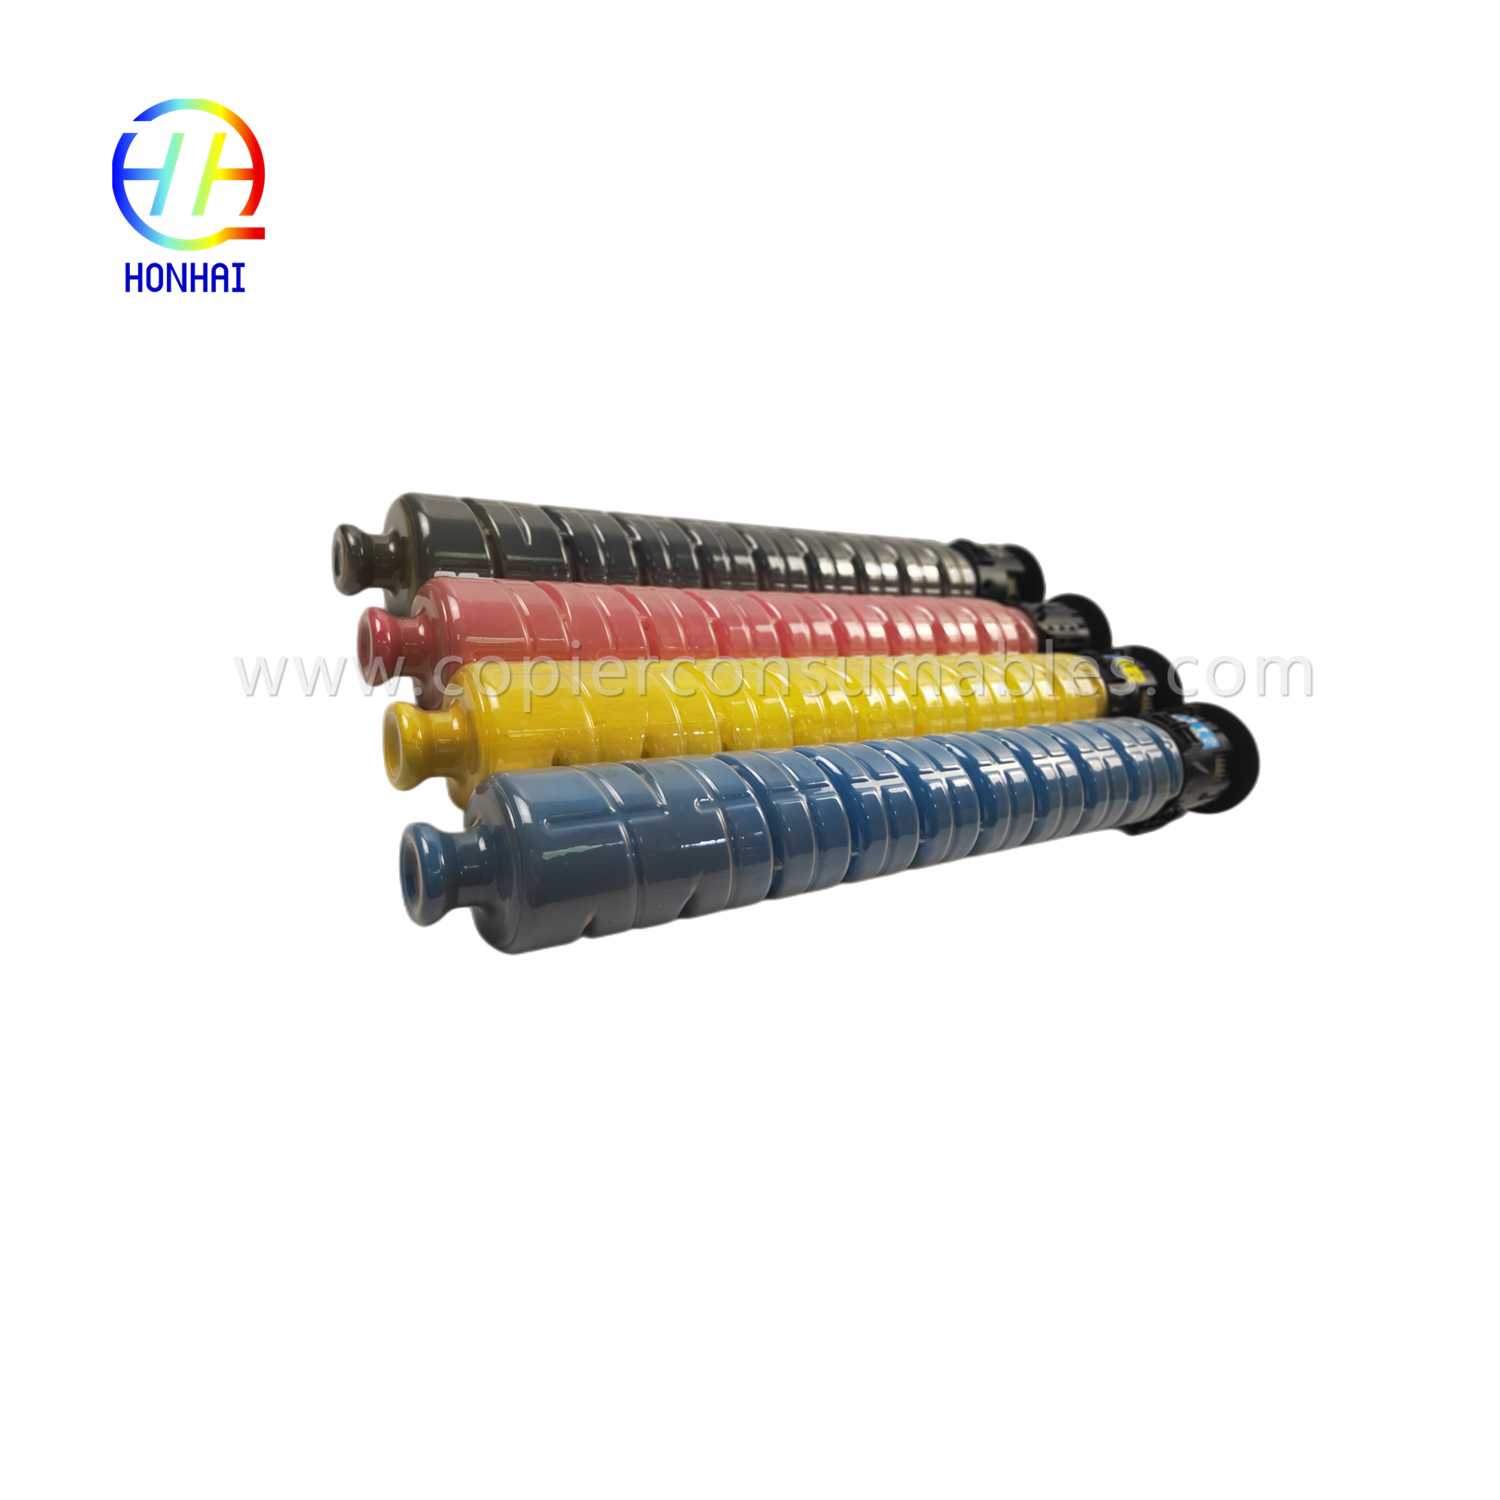 Toner Cartridge 4 Color Set for Ricoh 841849 841852 841851 841850  MPC4503 MPC5503 MPC6003 MPC3004ex MPC3504ex MPC4504 MPC4504 ex MPC4504ex MPC6004